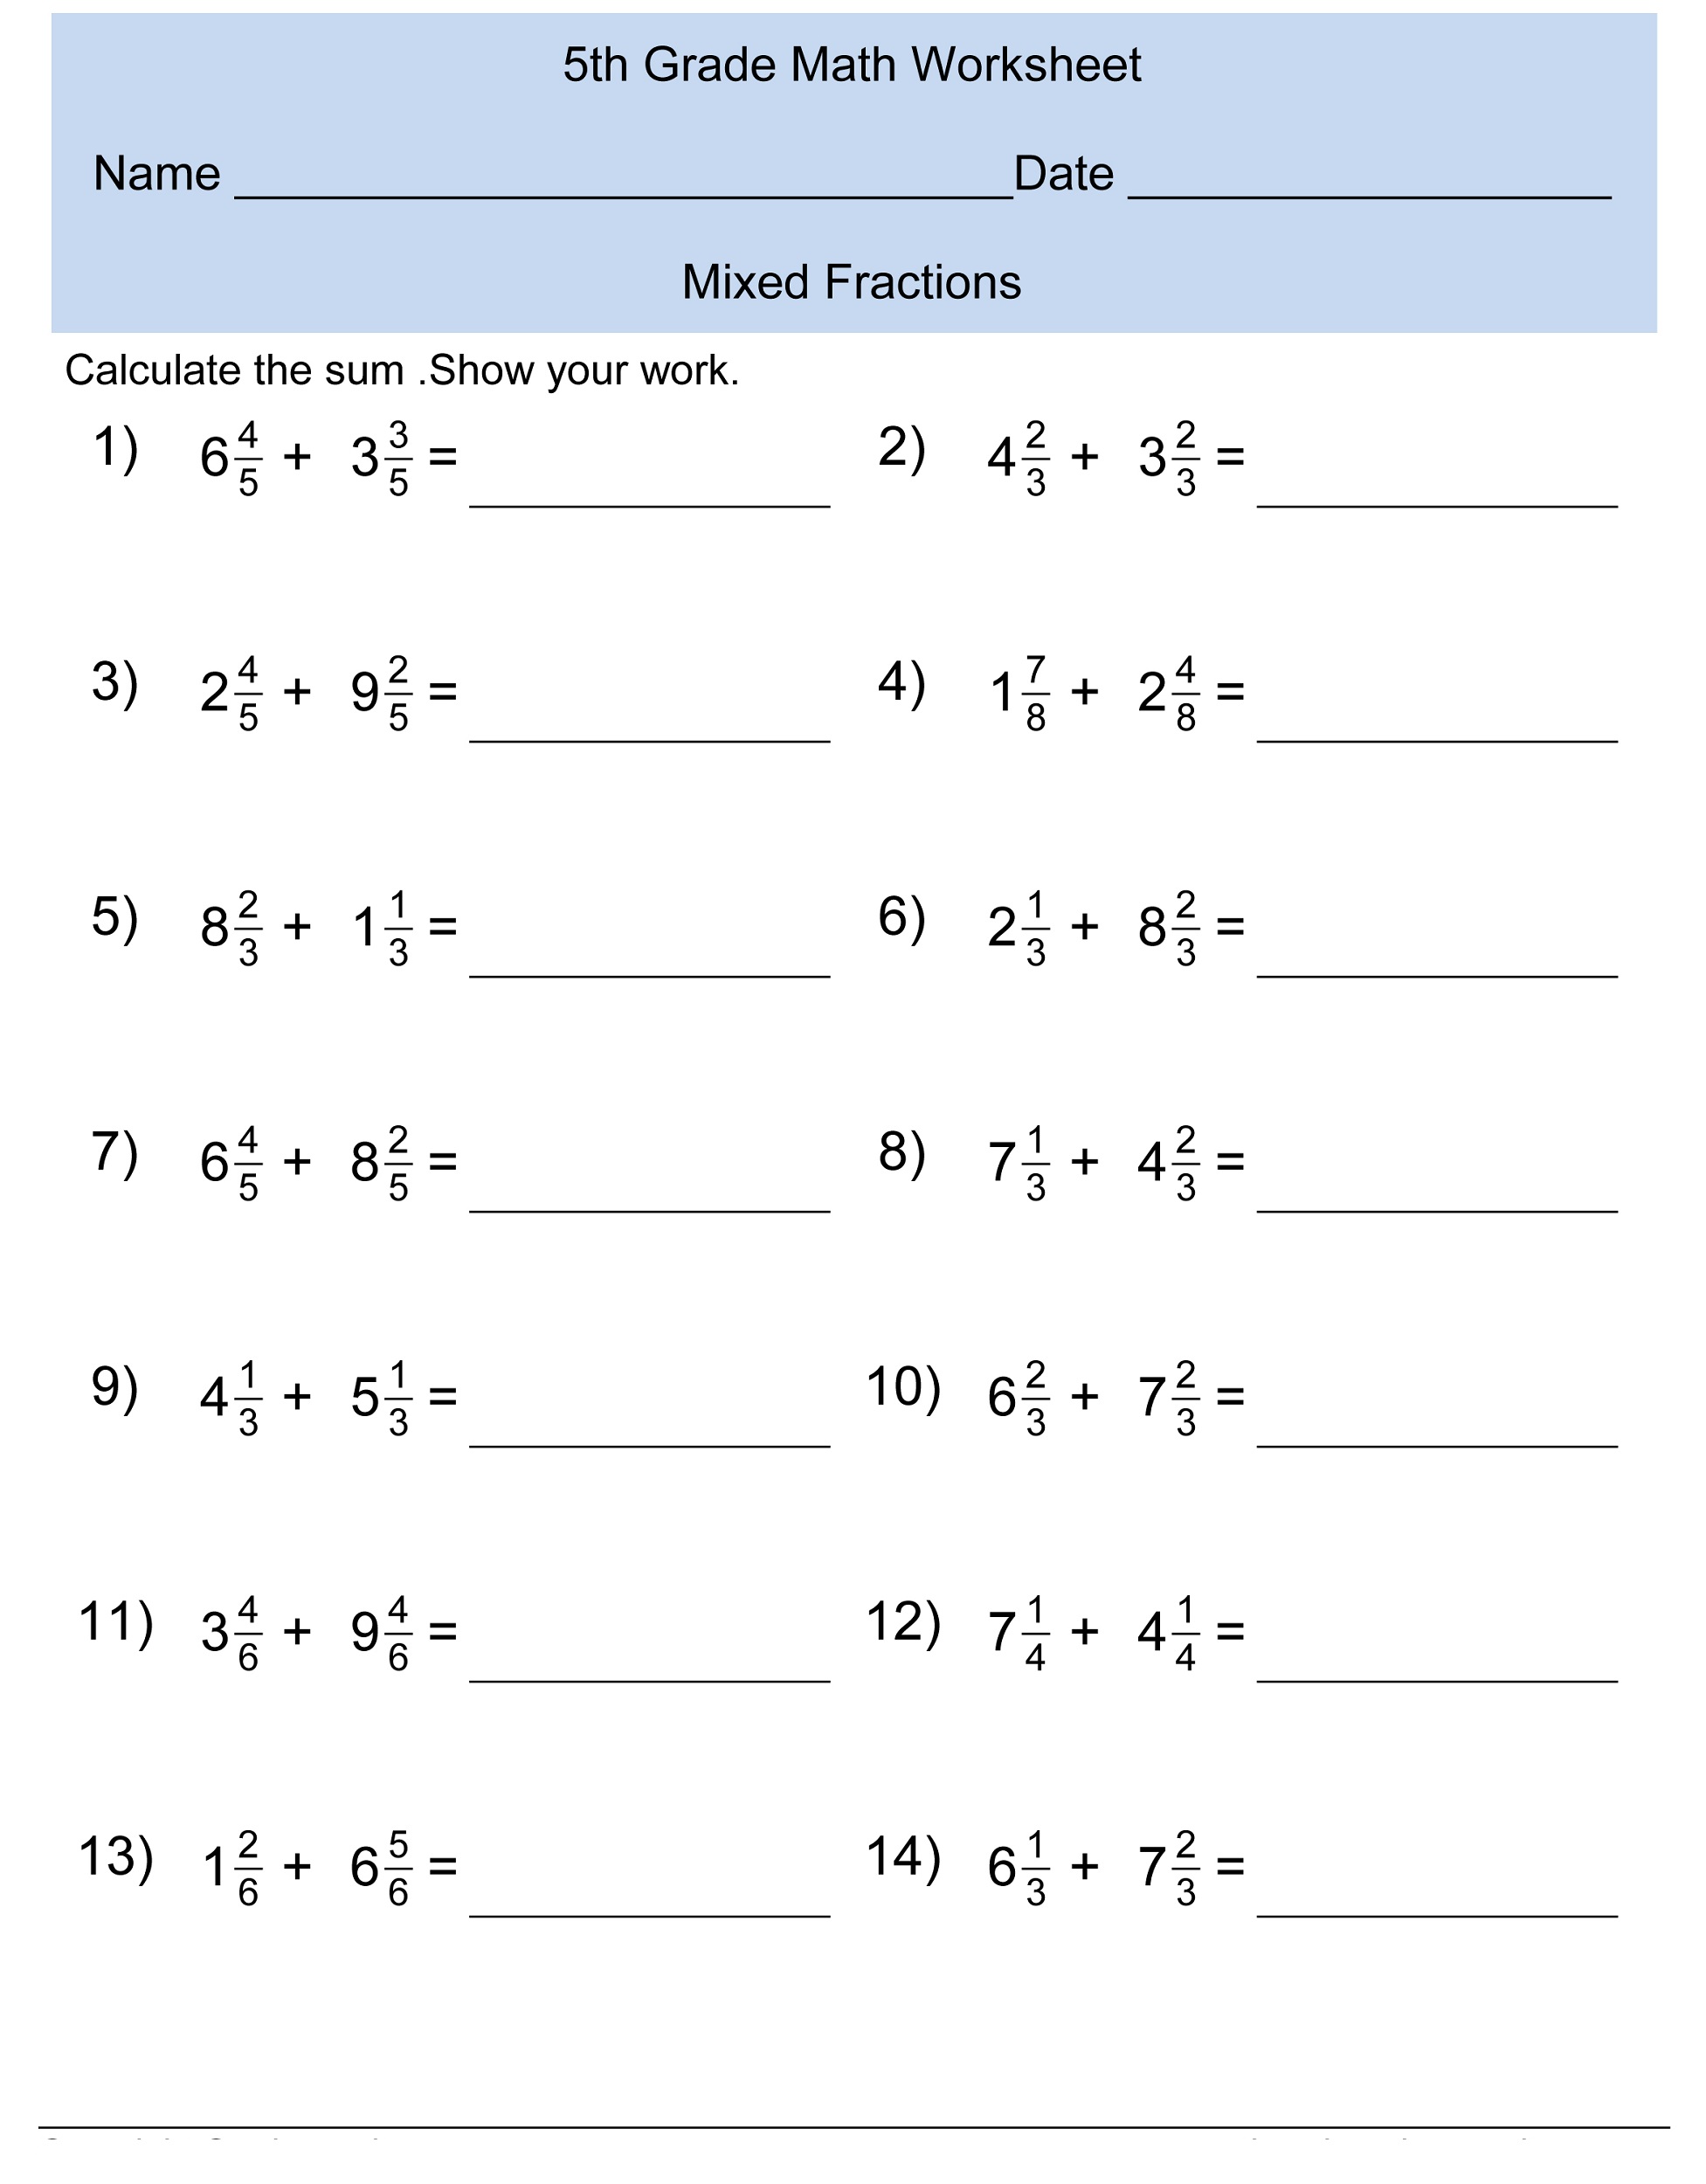 Free Grade 5 Math Worksheets | Activity Shelter